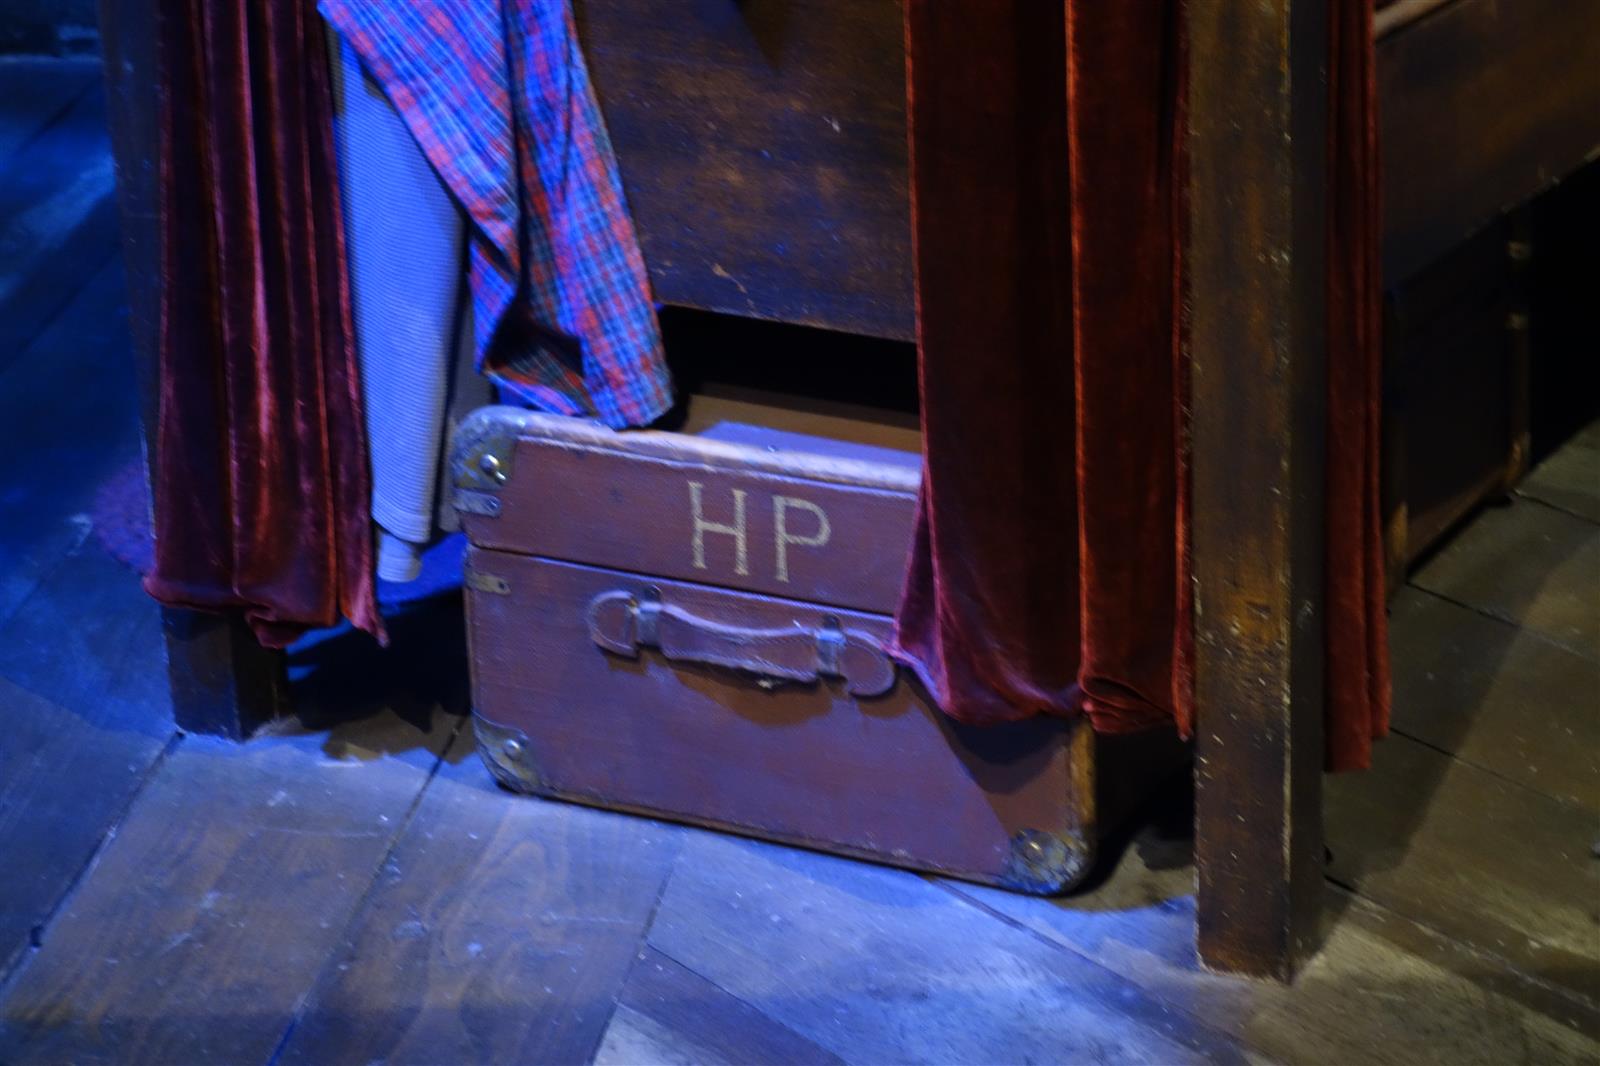 11. Harry Potter's Suitcase